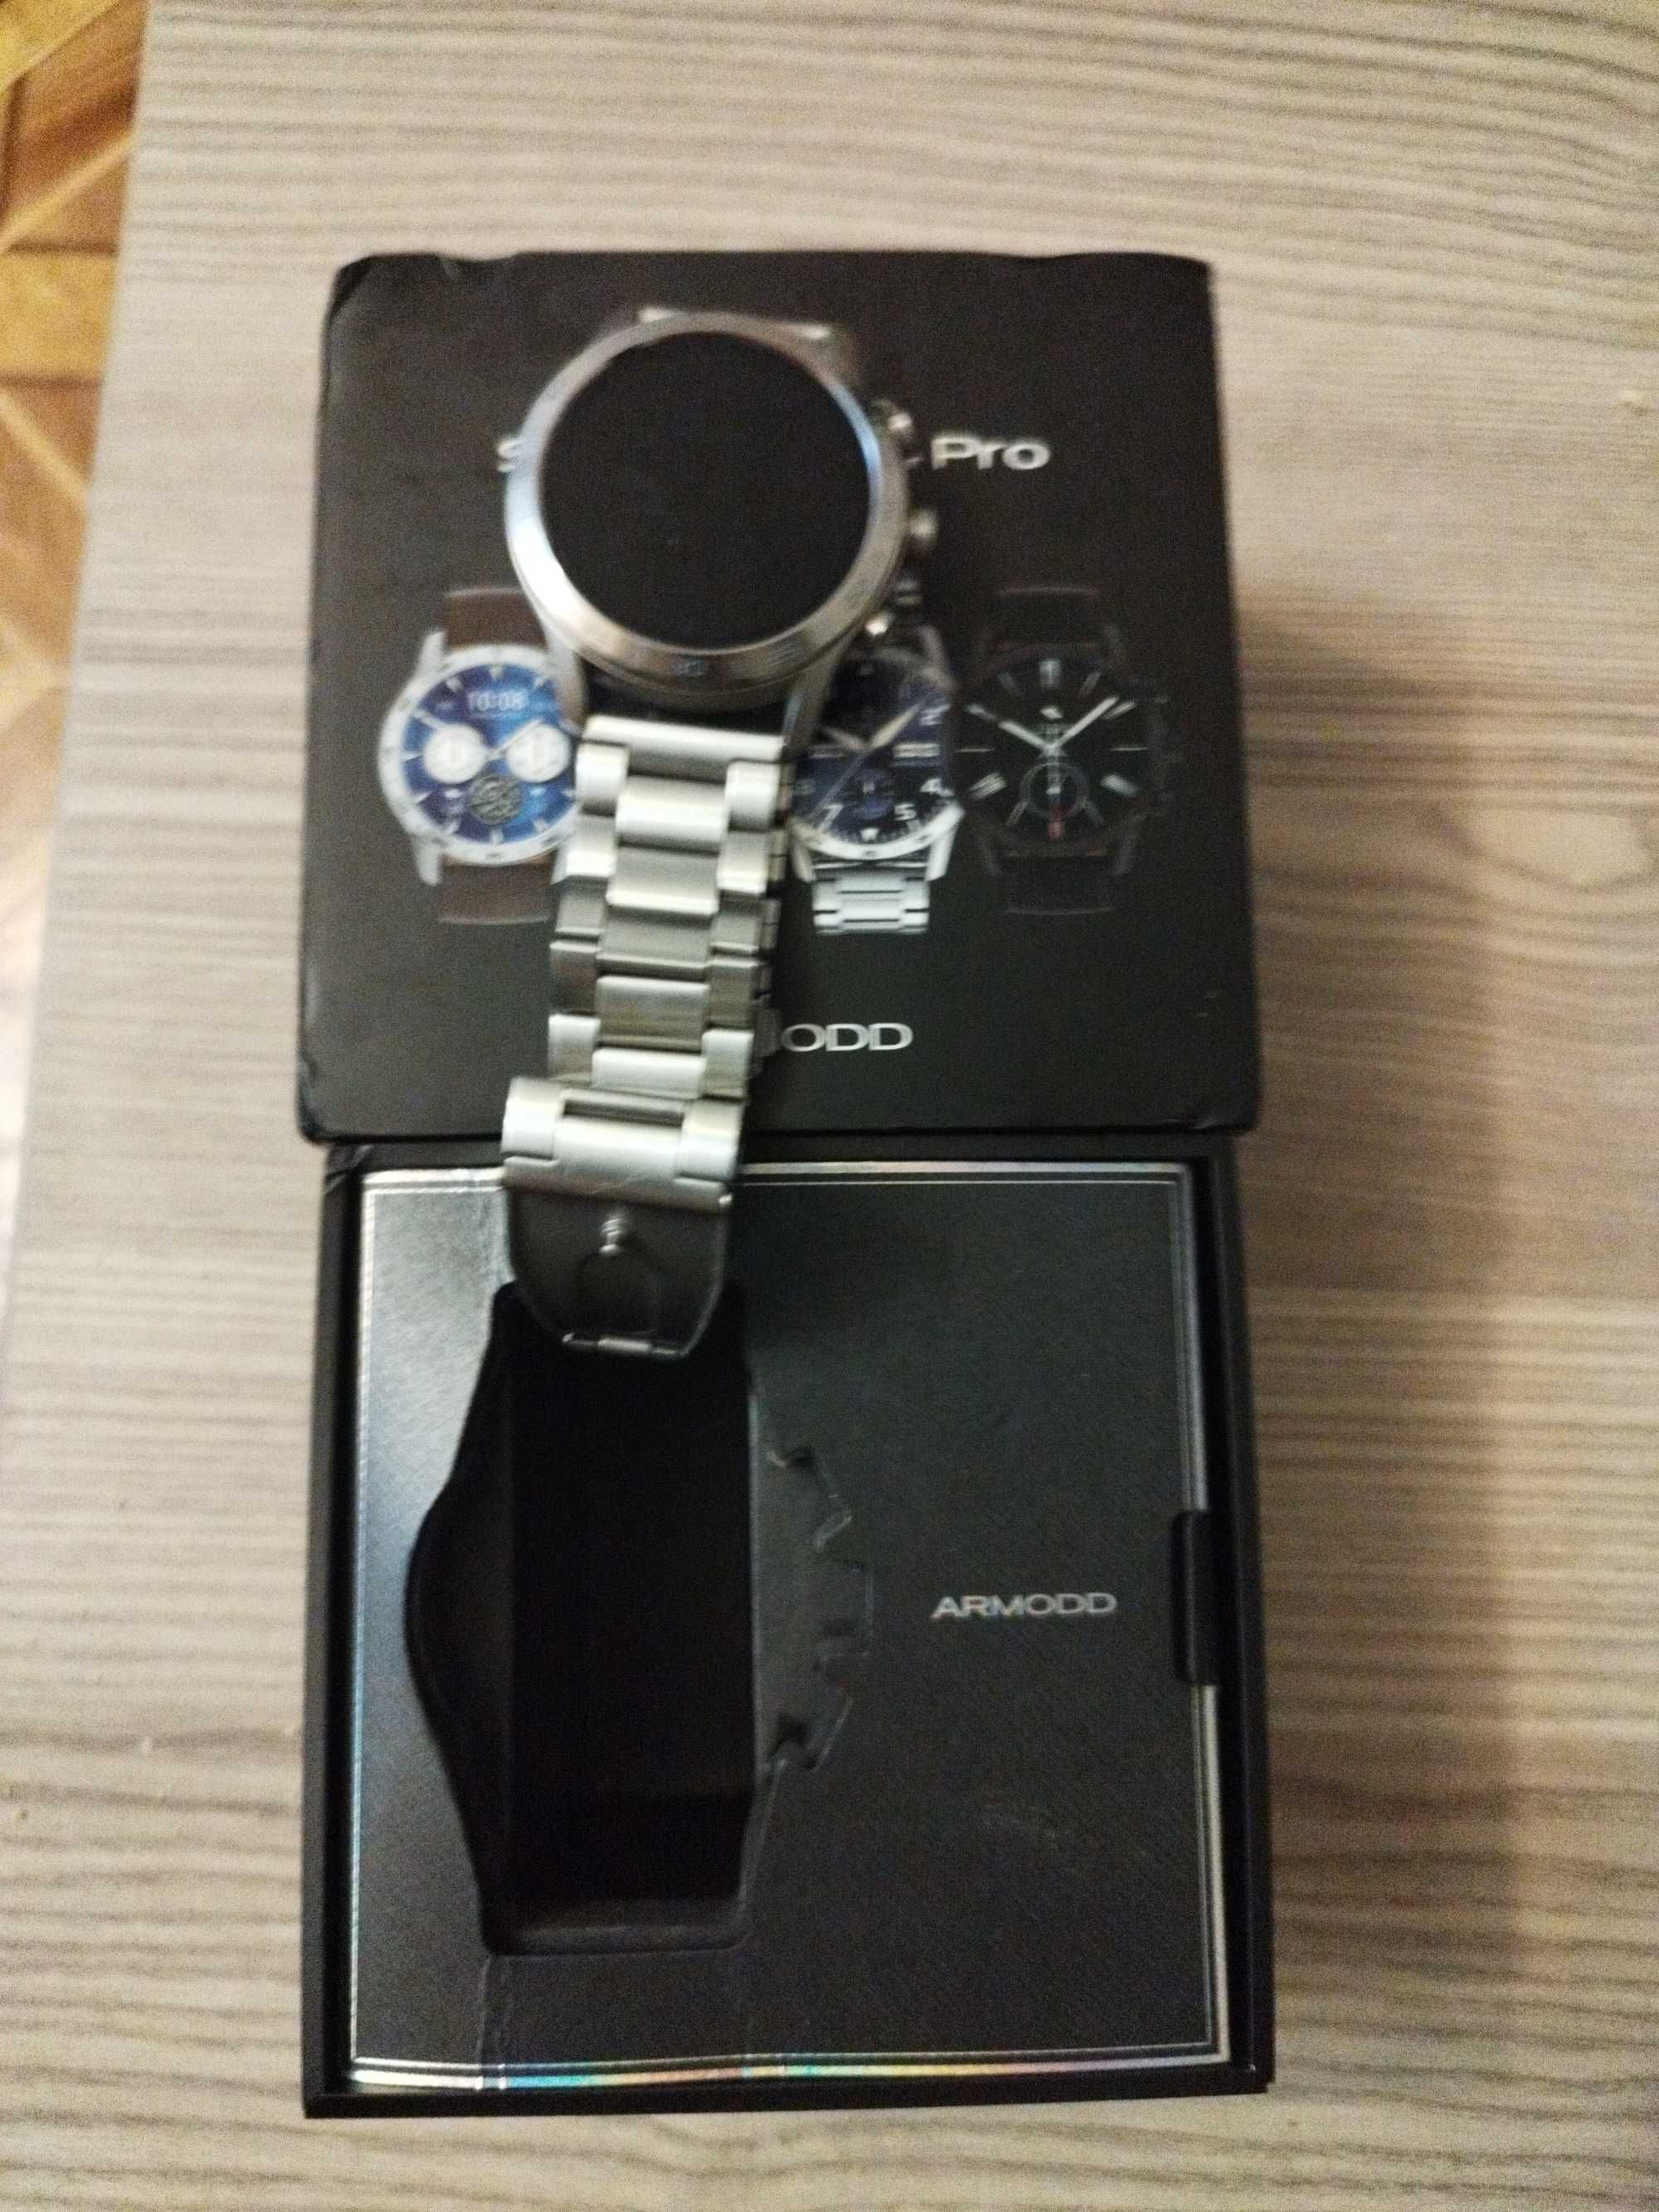 Smartwatch4pro ARMODD